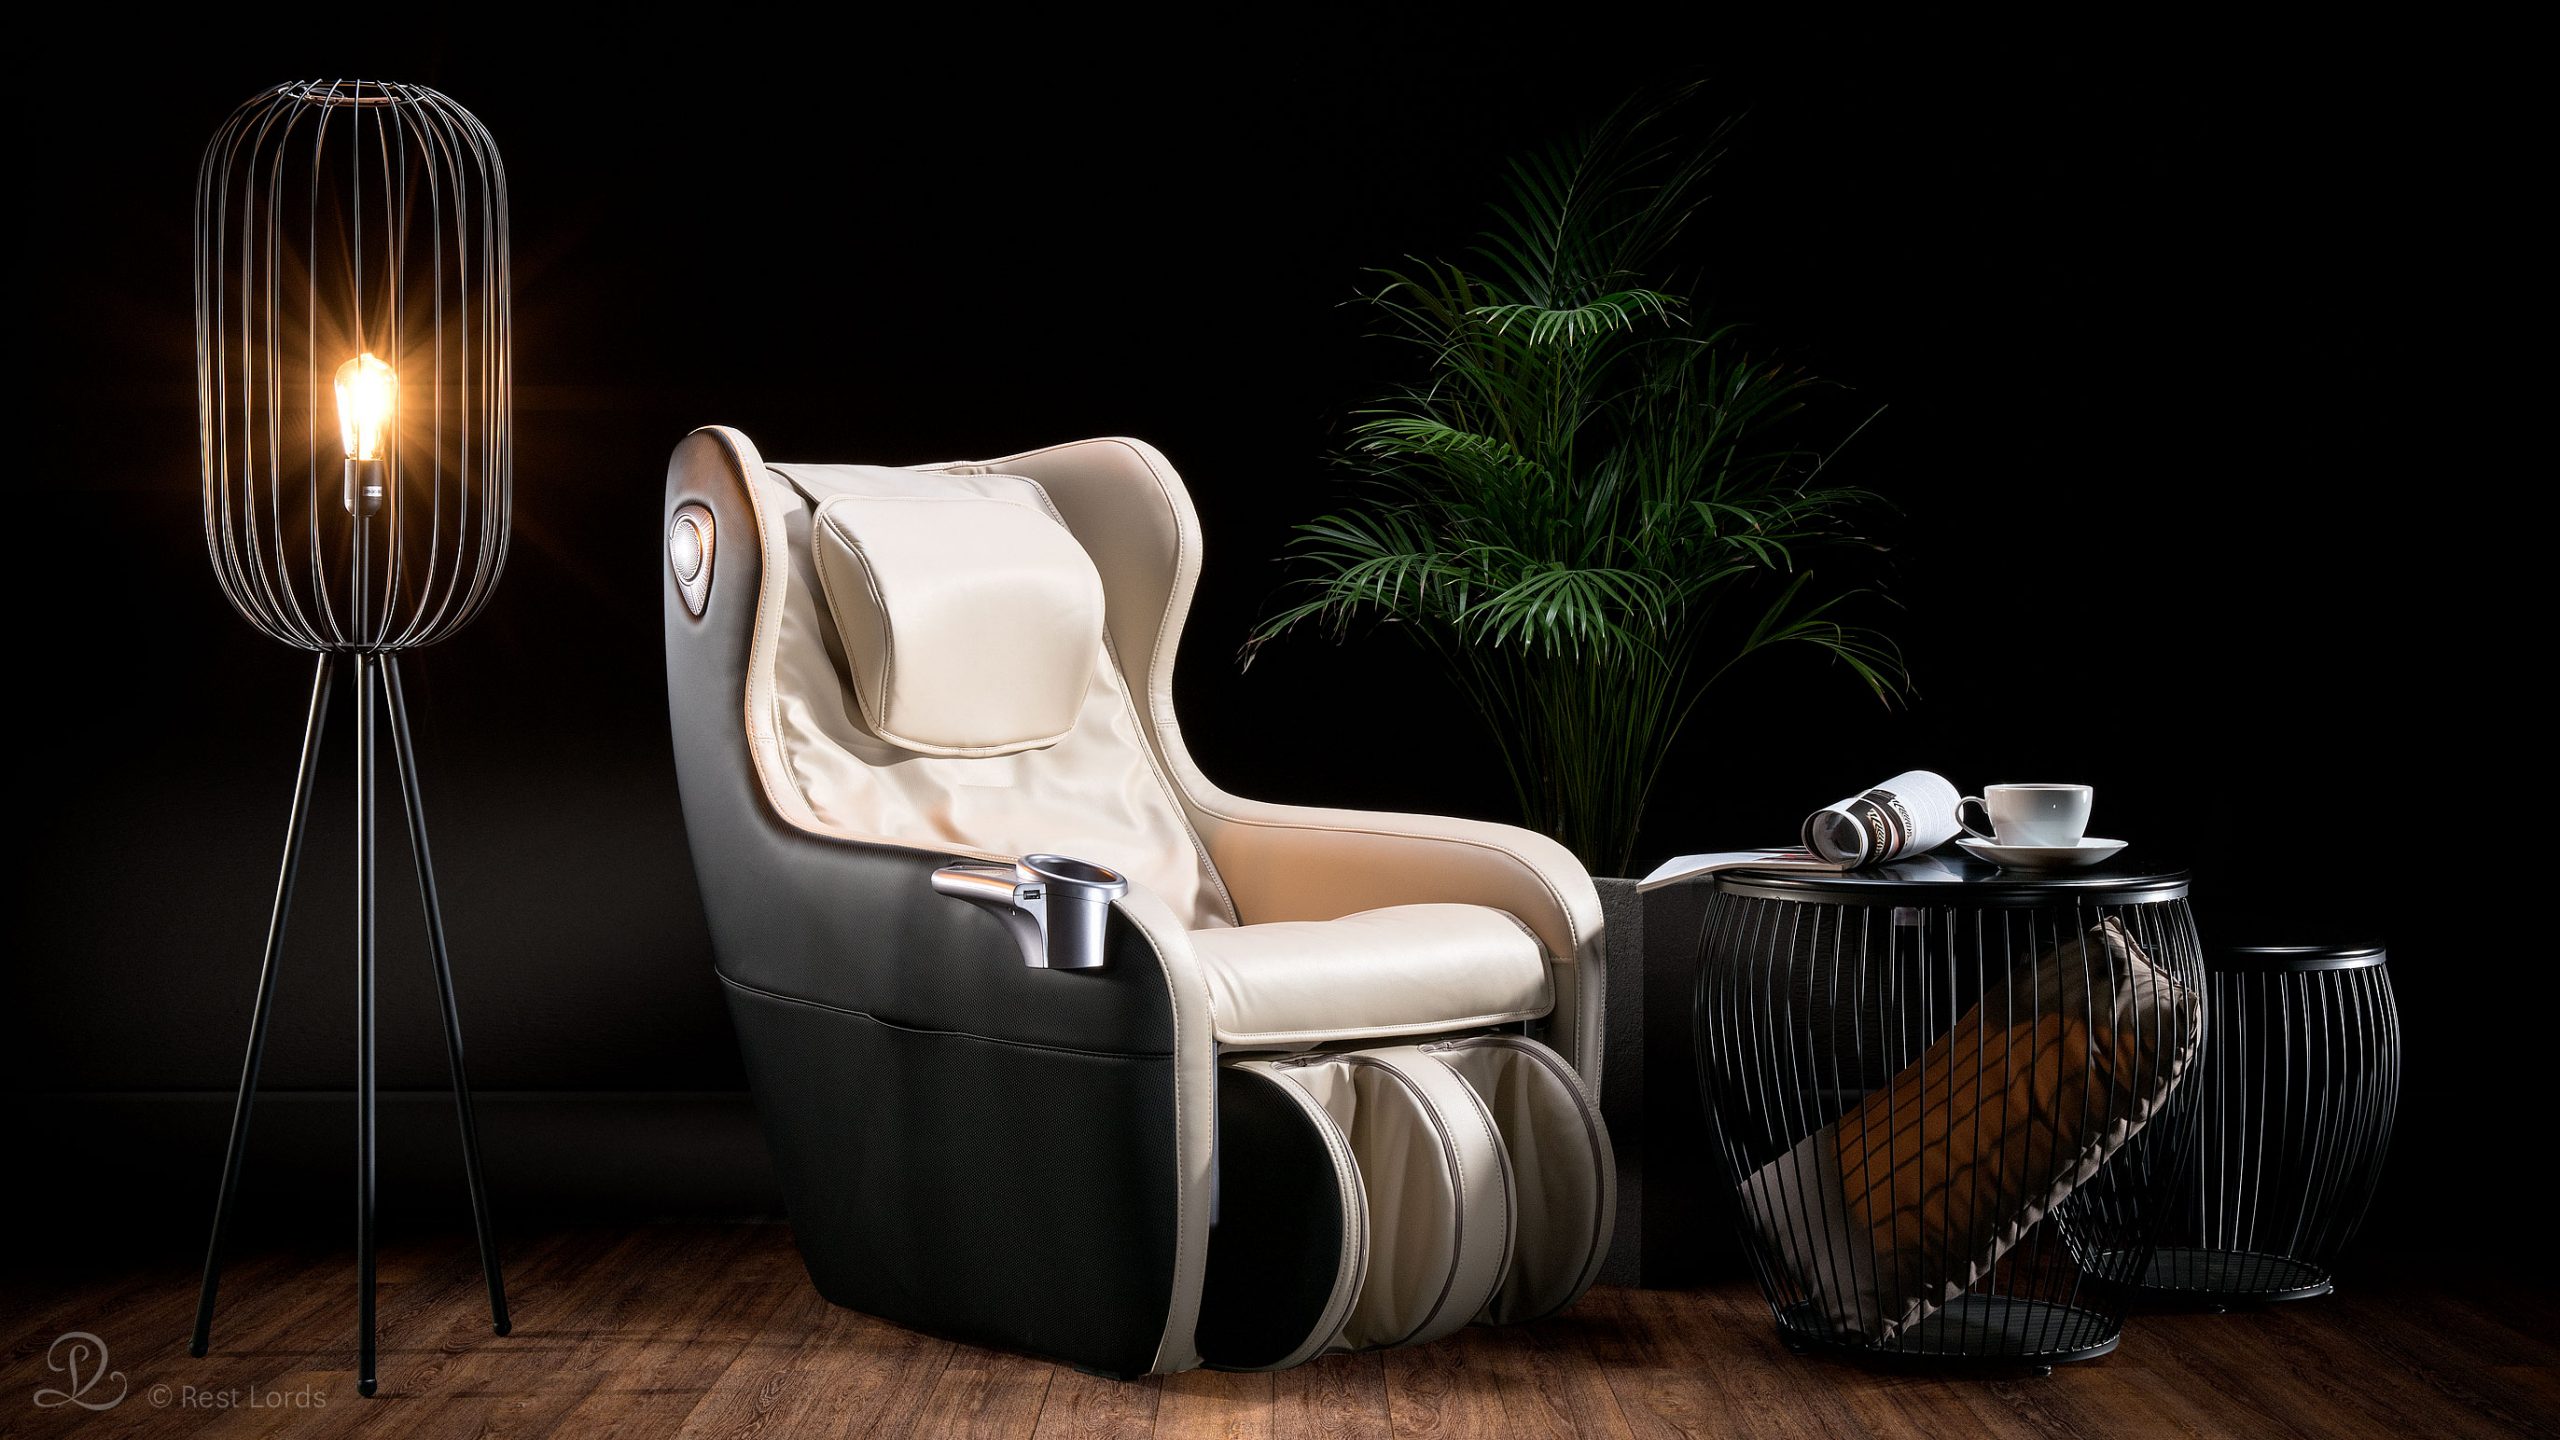 Massage chair Massaggio Ricco arrangement photos 1